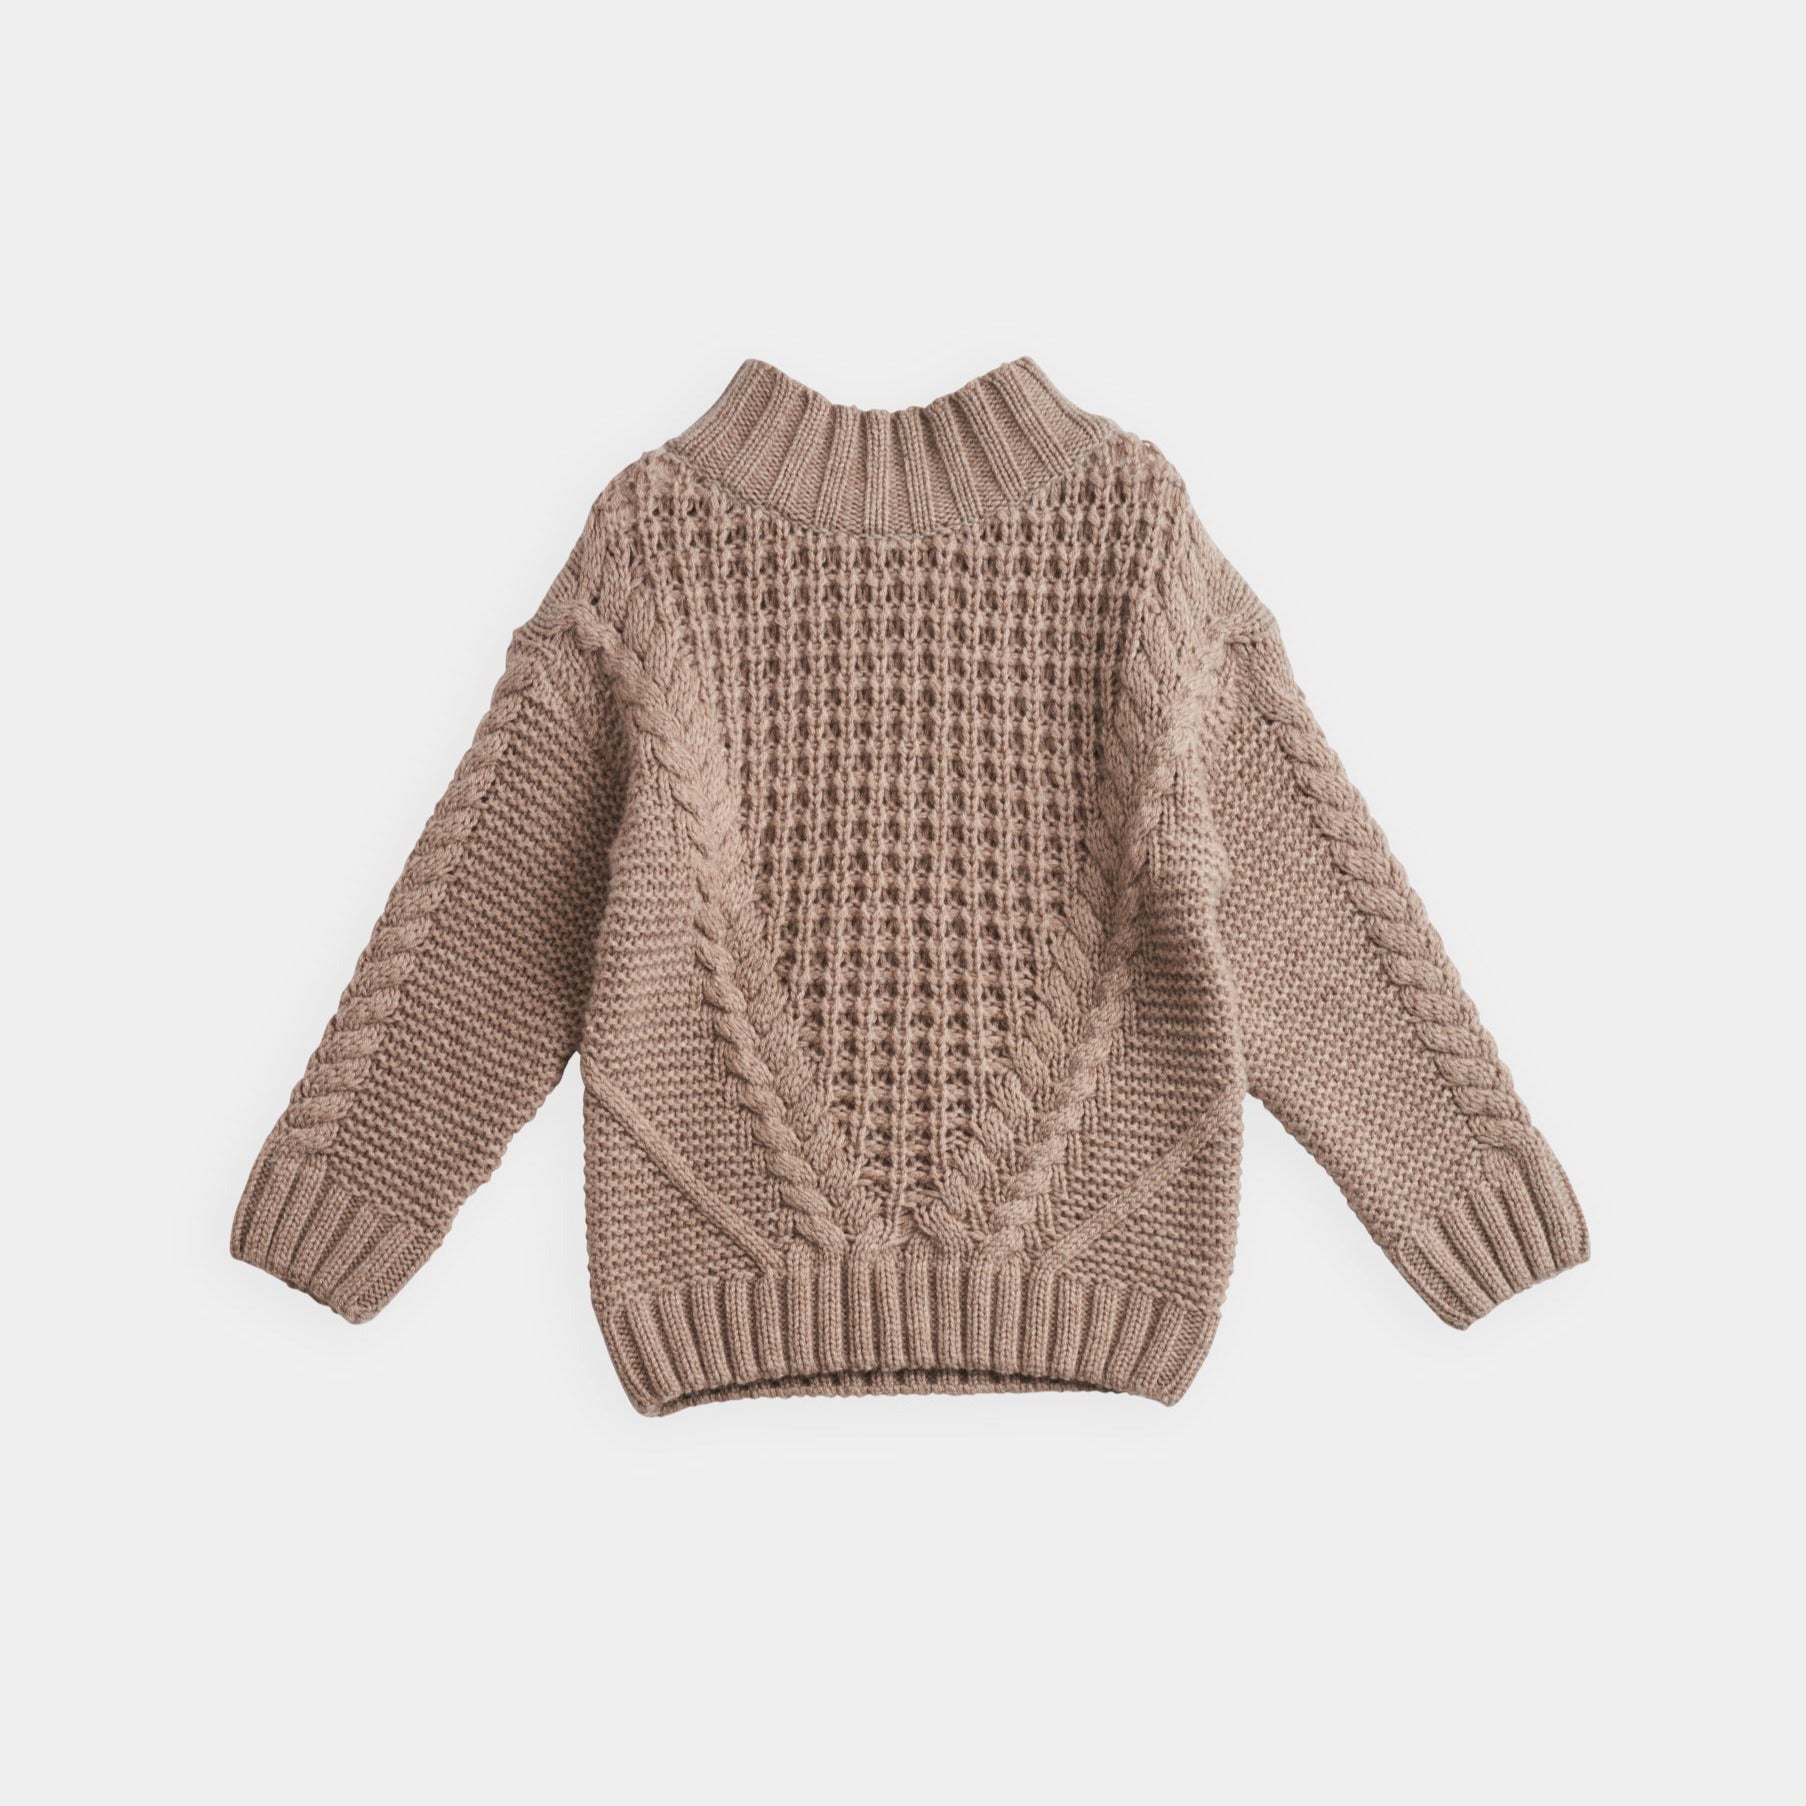 New - Belle Enfant Cable Knit Unisex Baby & Children's Sweater Hazelnut | BIEN BIEN www.bienbienshop.com